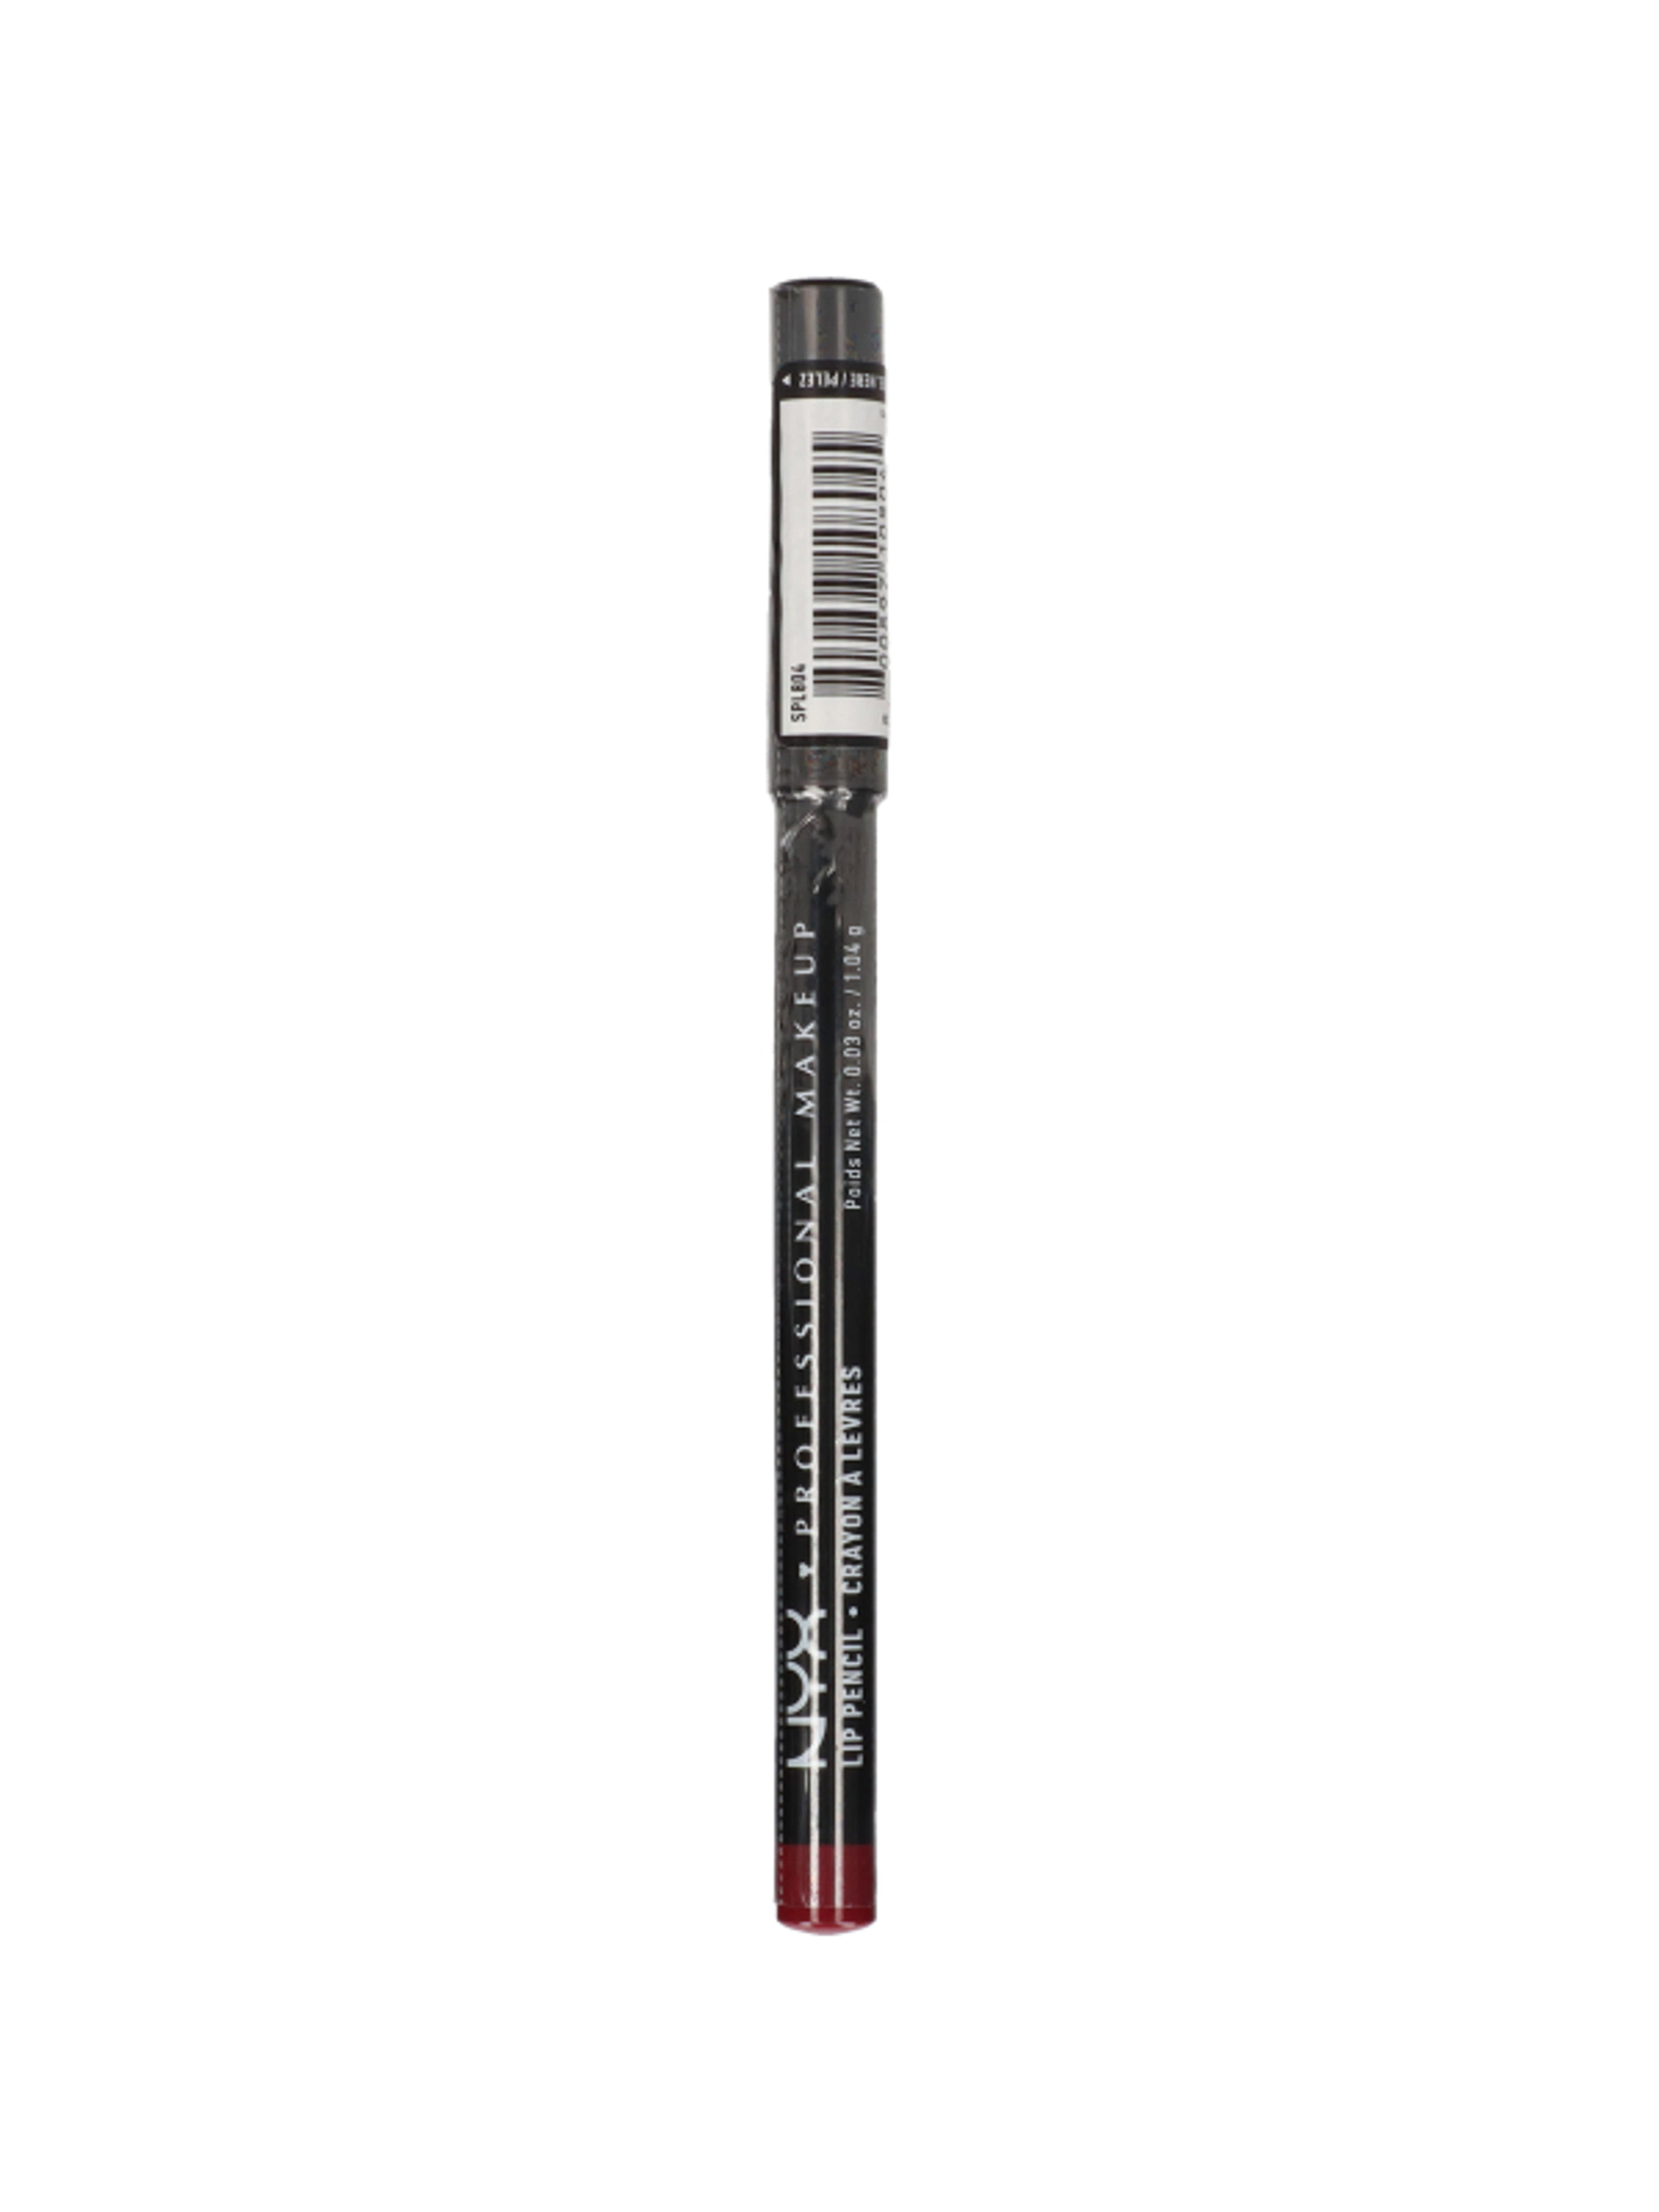 NYX Professional Makeup Slim Lip Pencil ajakkontúr ceruza, Cabaret - 1 db-4